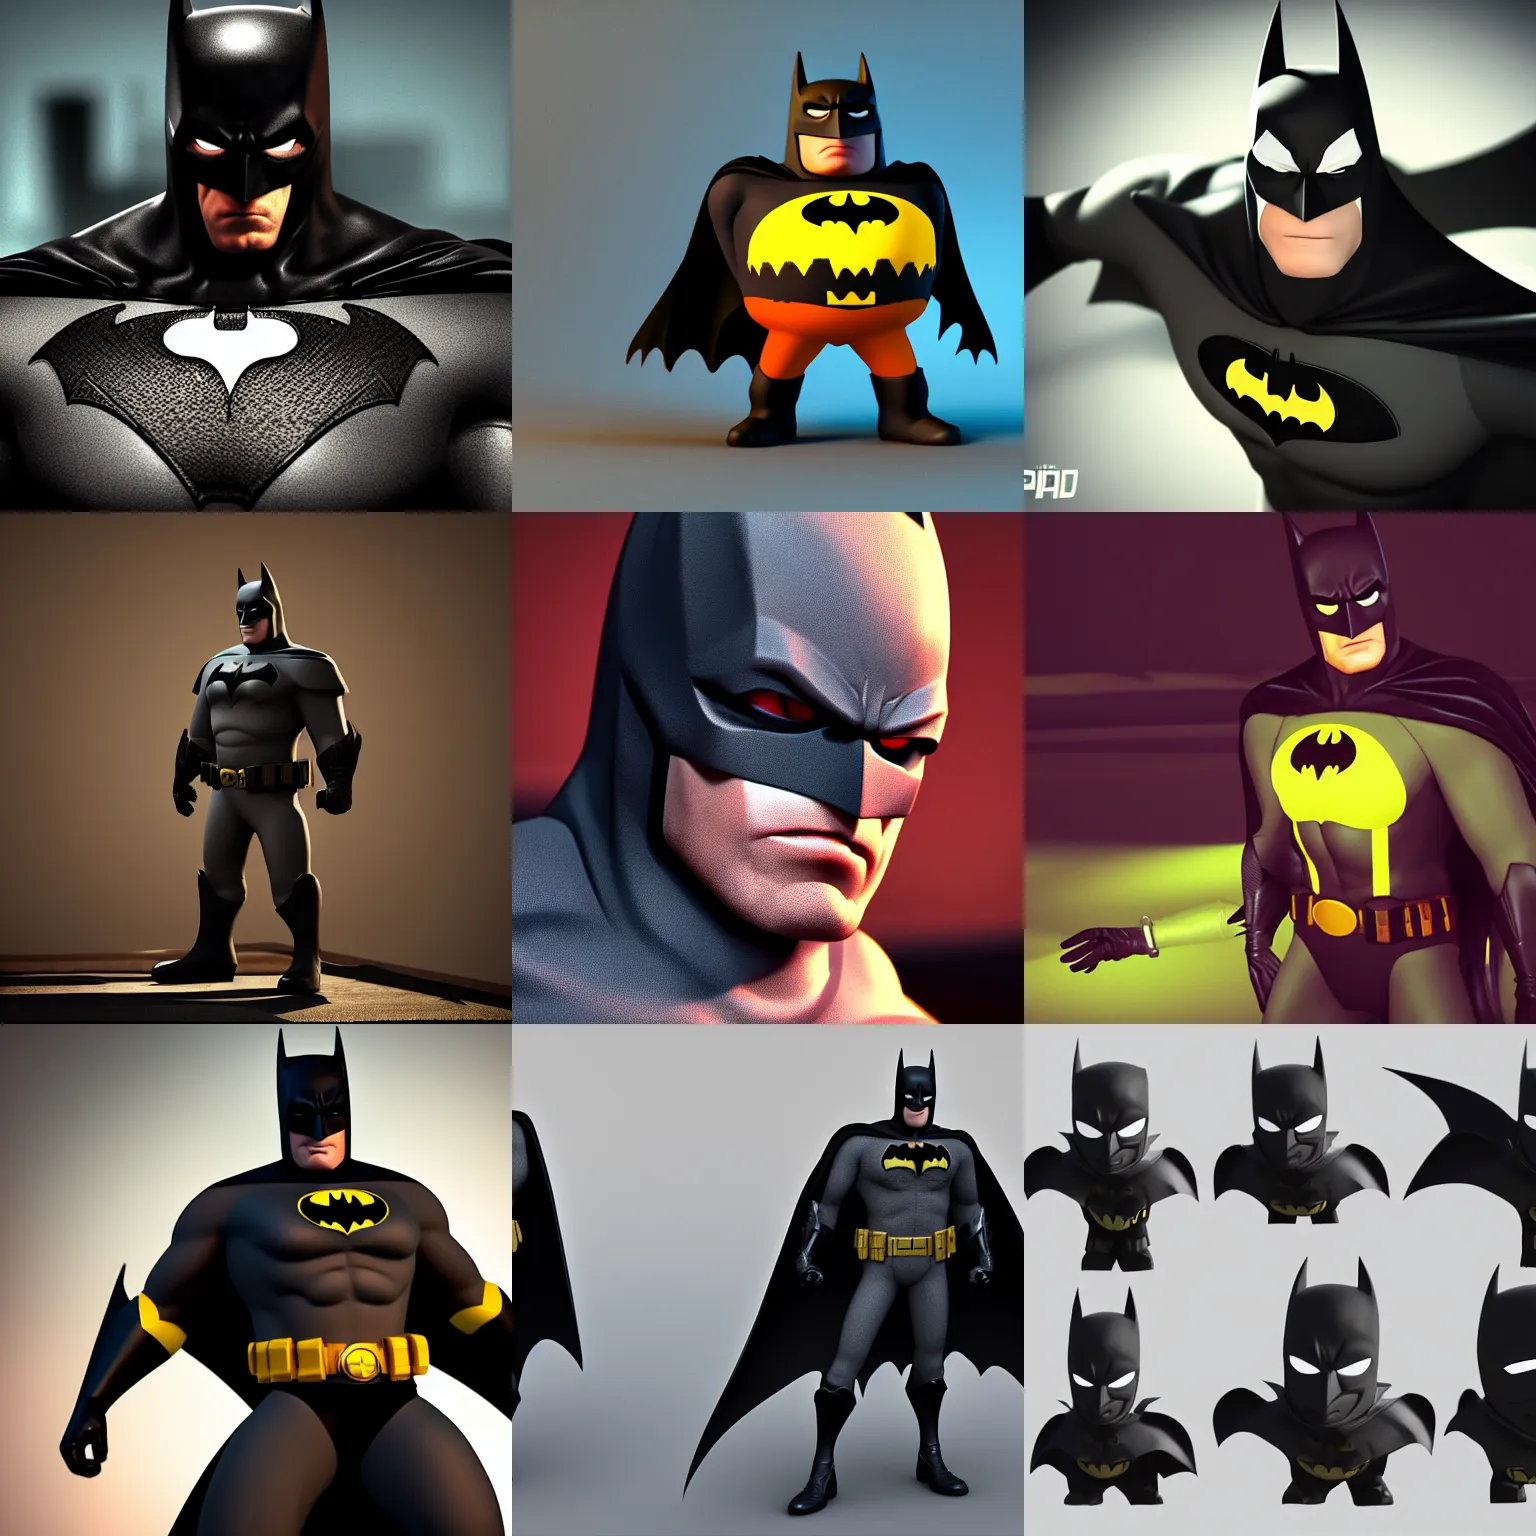 Prompt: batman in the style of pixar, 3 d render, cinematic lighting, volumetric lighting, octane render